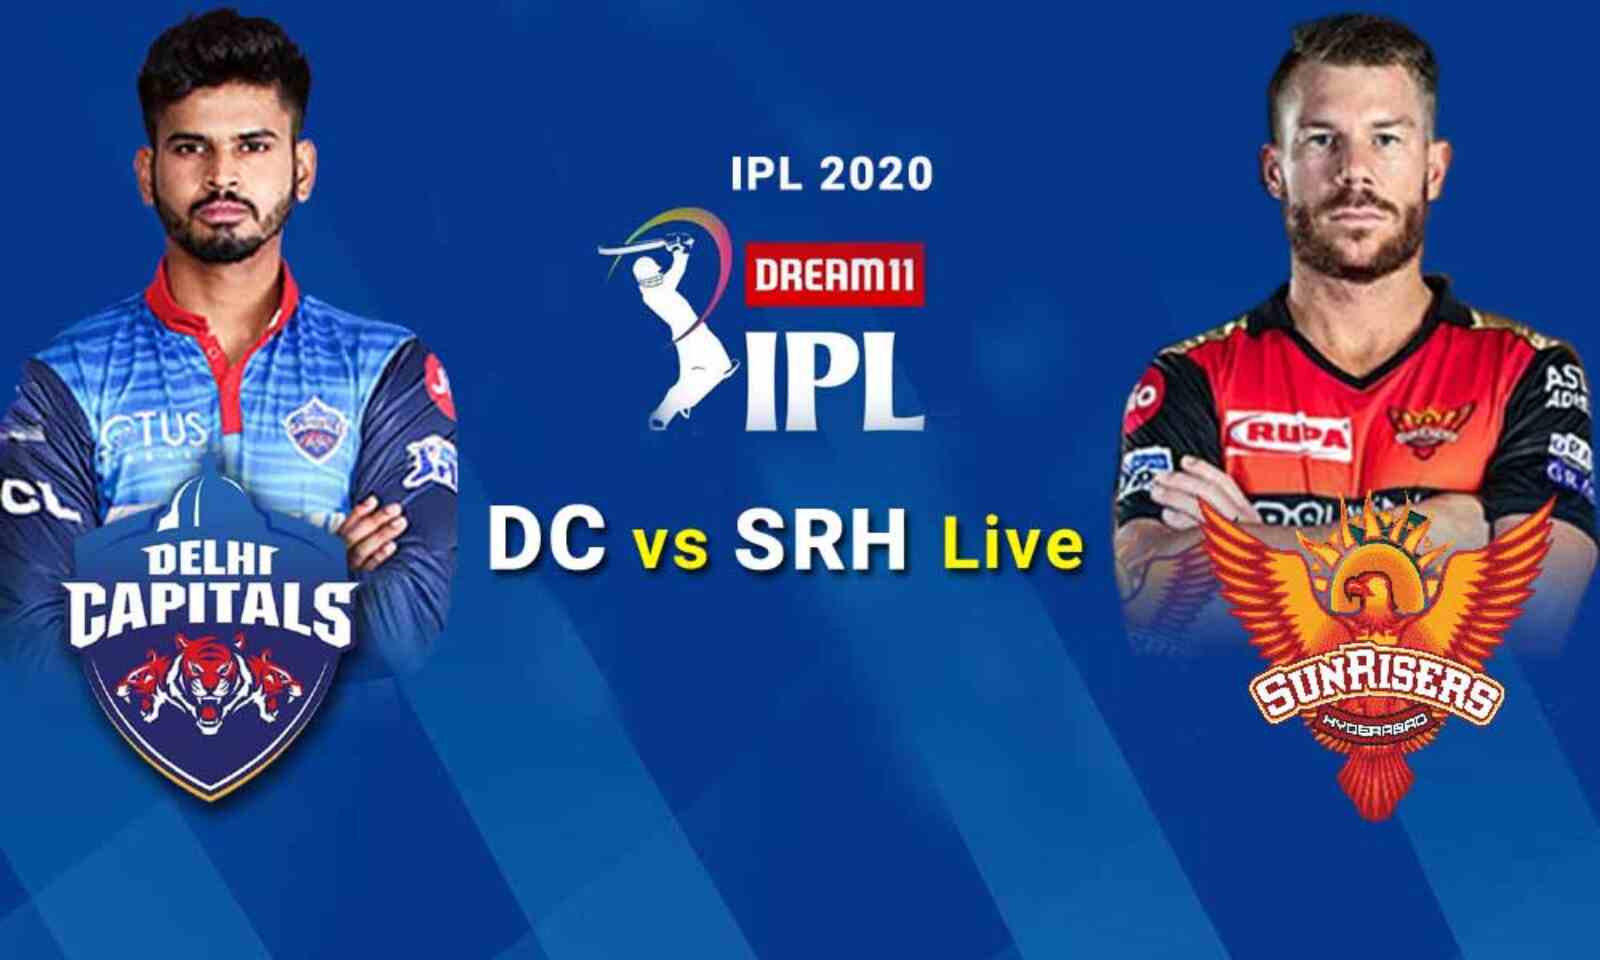 DC vs SRH Live Cricket Score IPL 2020 Match 11 Updates Hyderabad win by 15 runs